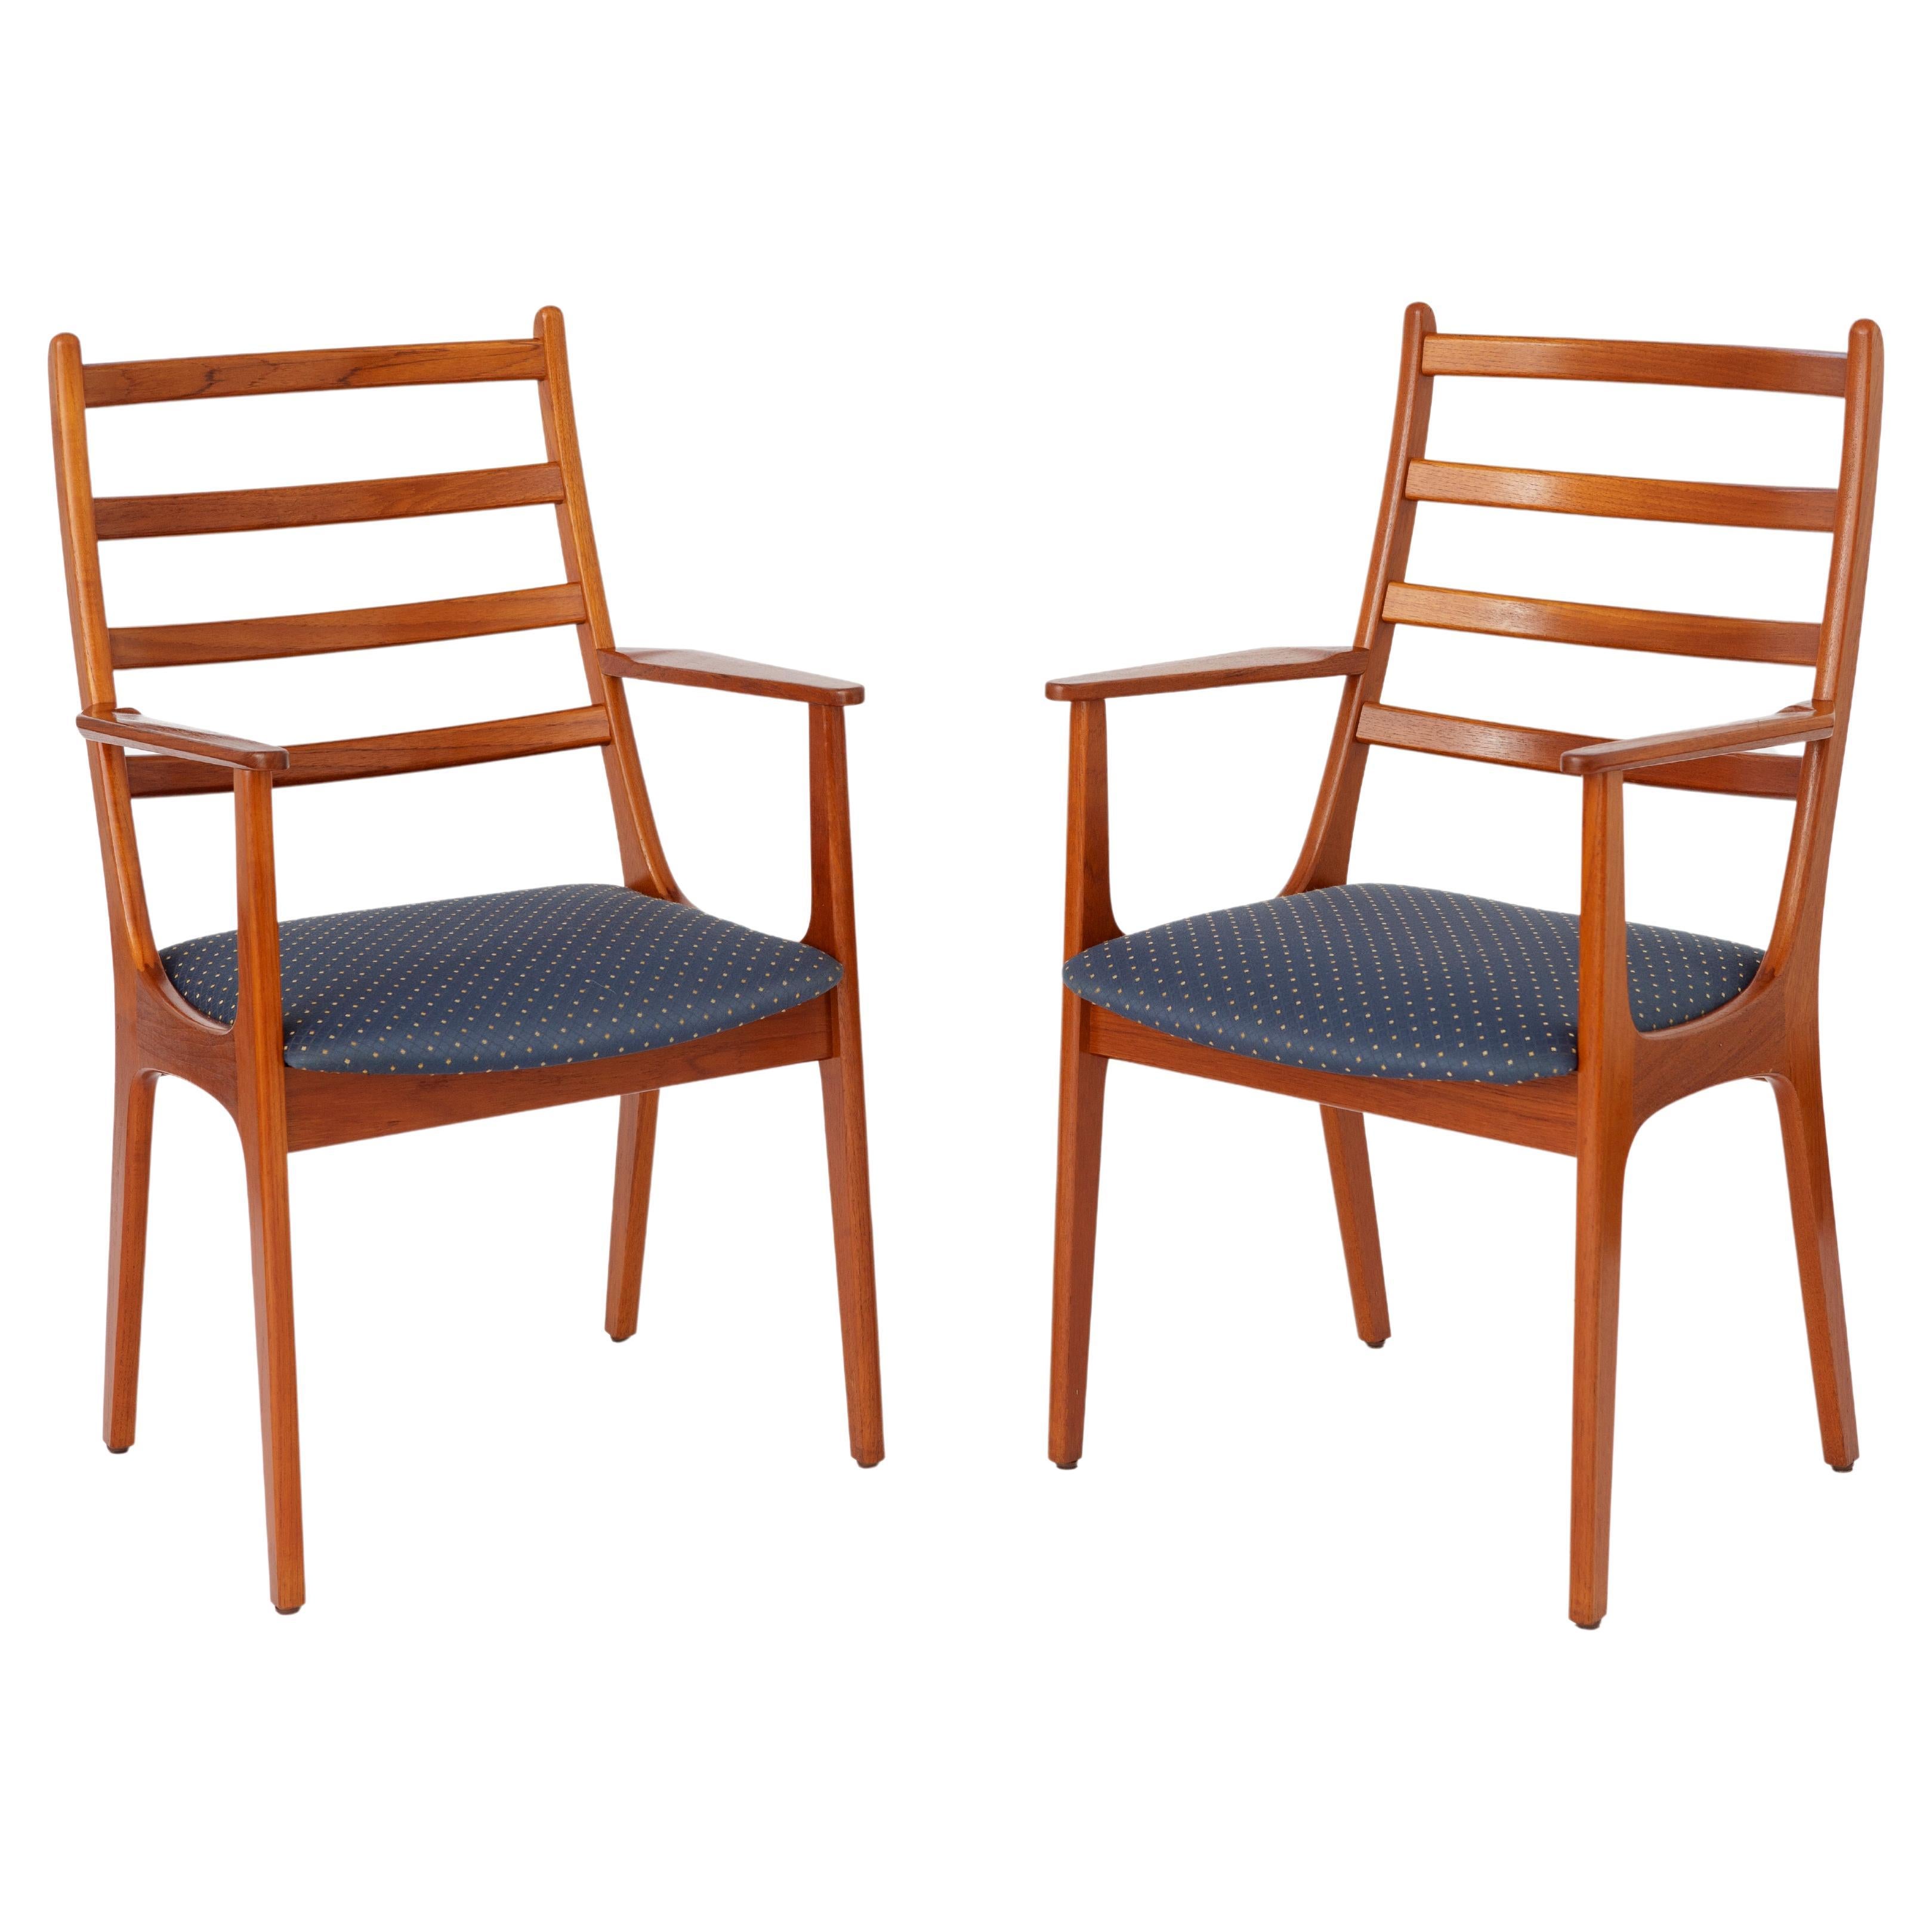 2 Teak Dining chairs 1960s by KS Mobler, Denmark For Sale